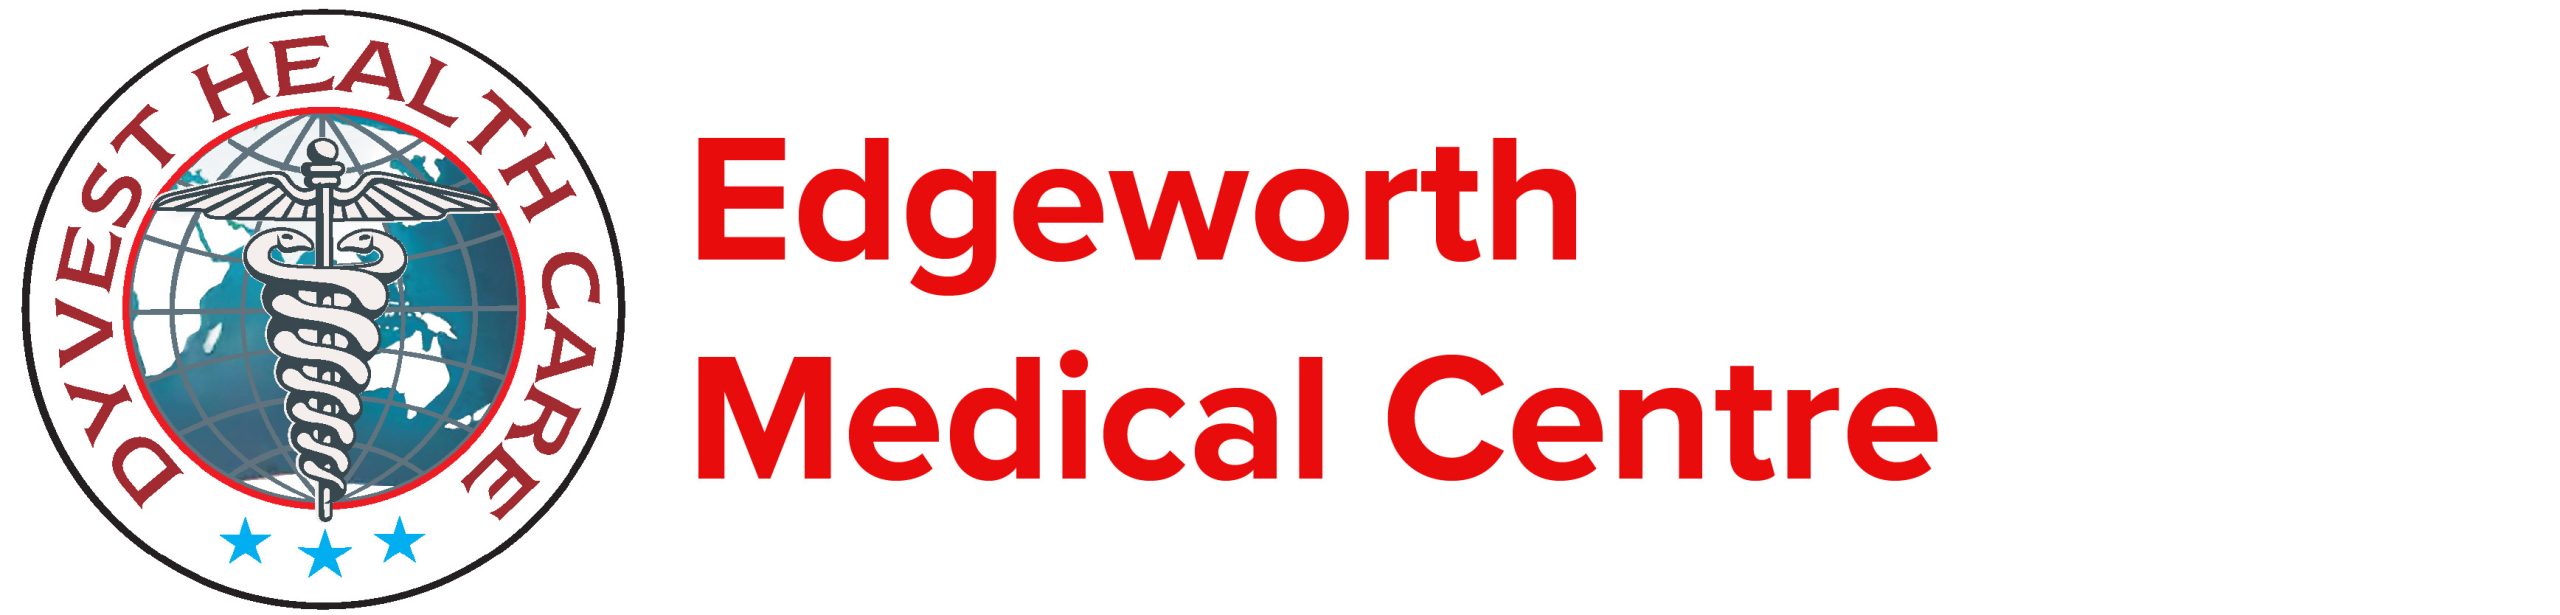 Edgeworth Medical Centre Logo